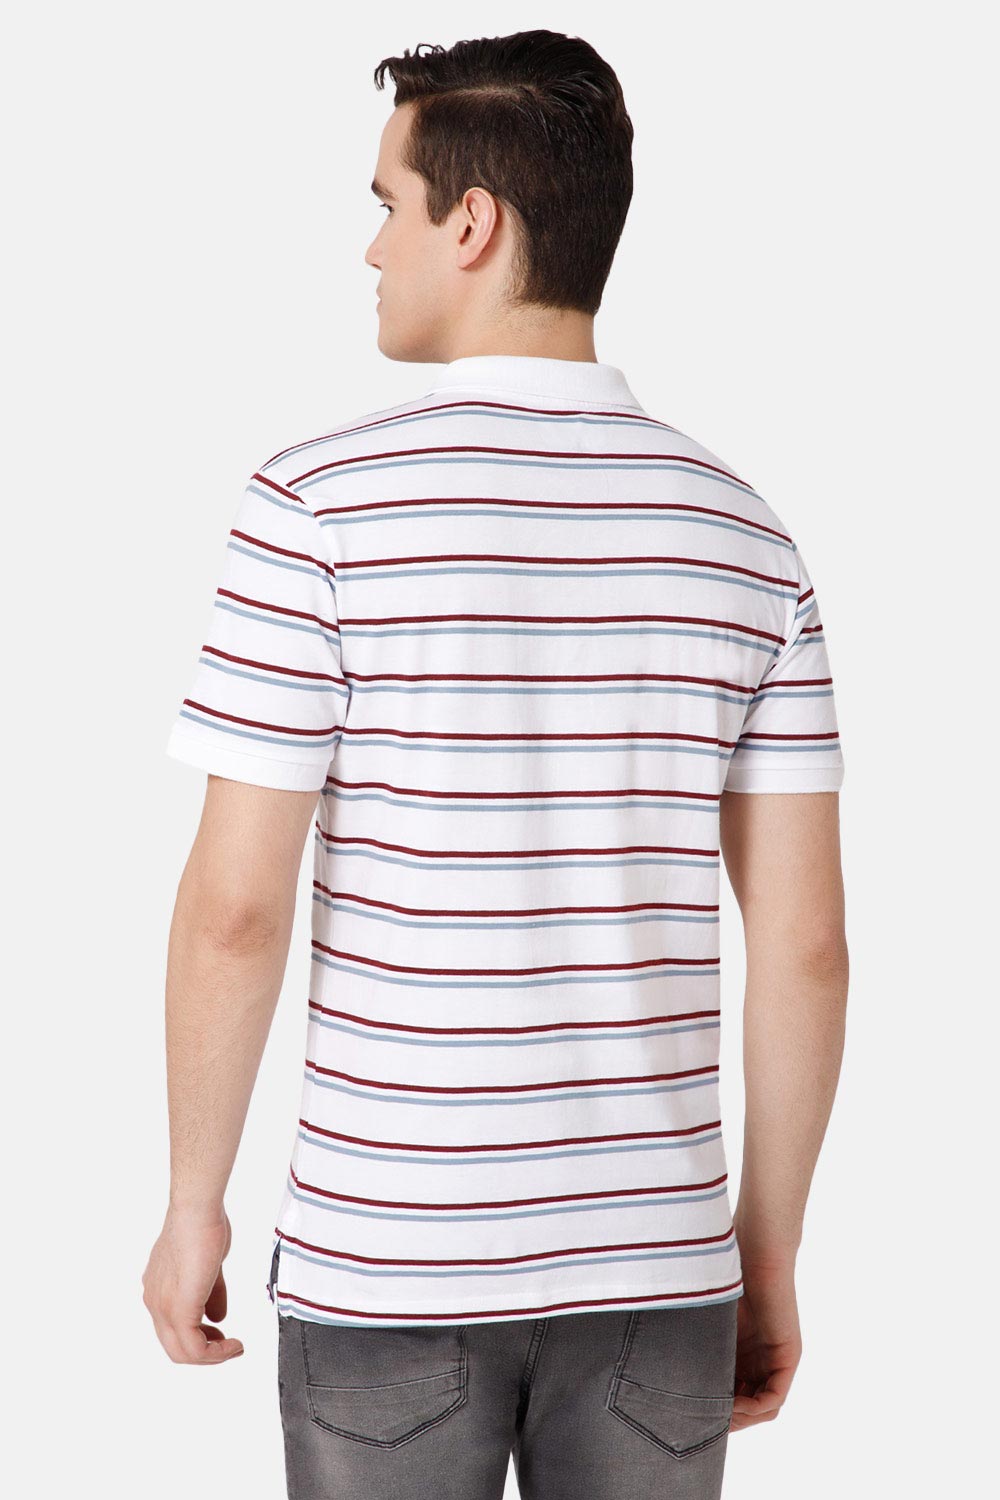 Enhance T-Shirts Men's Polo - White - TS45